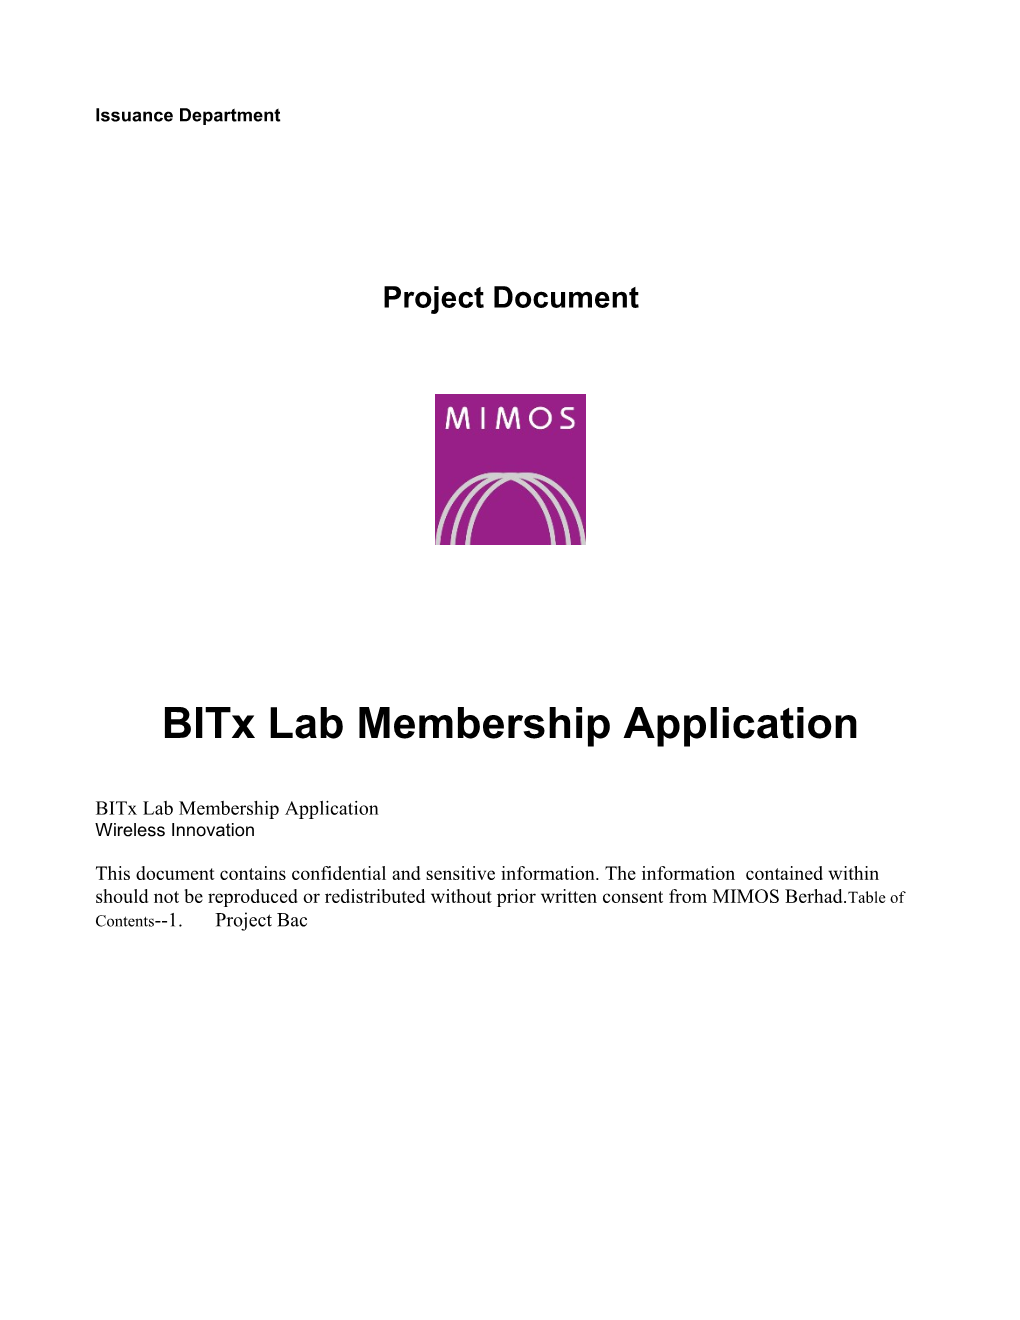 Bitx Lab Membership Application